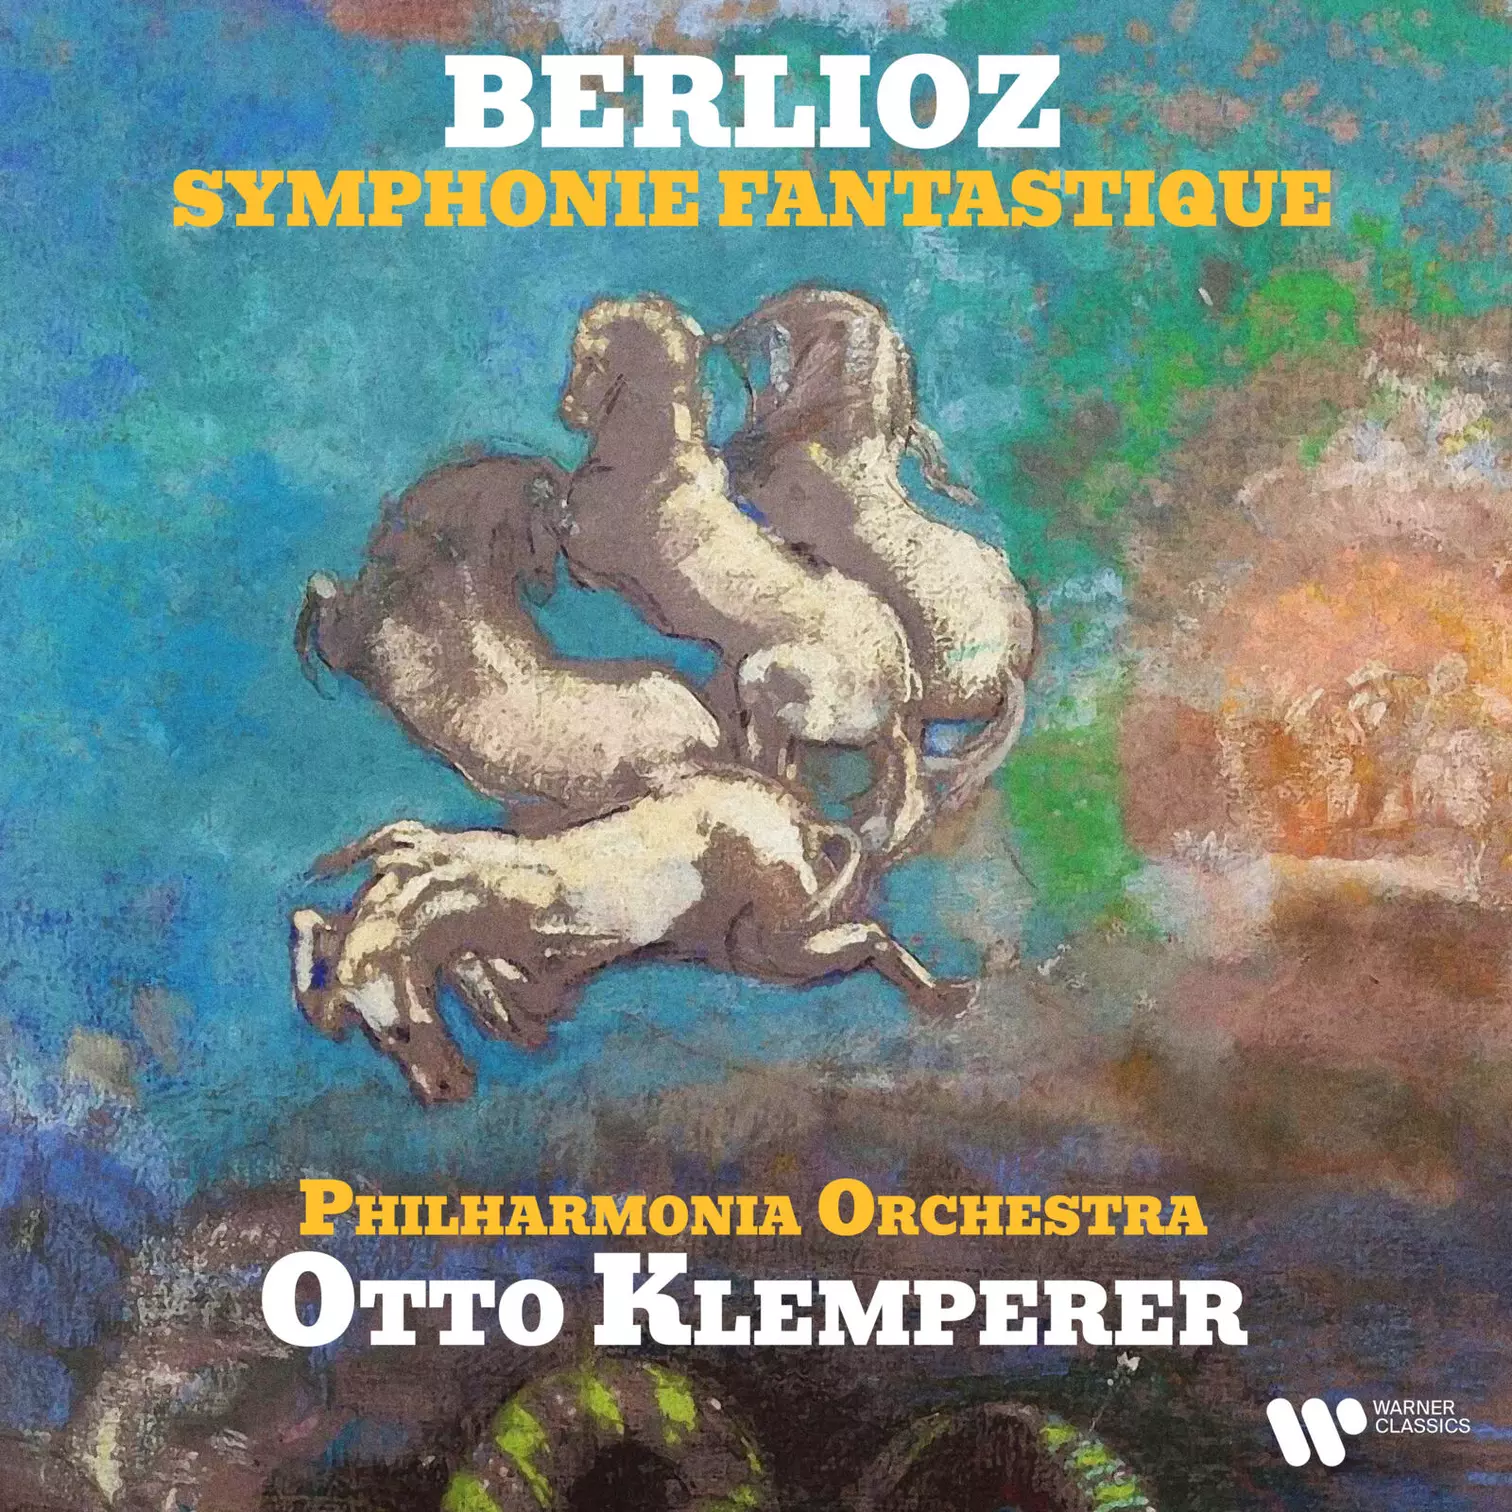 Berlioz Symphonie Fantastique, Philharmonia Orchestra & Otto Klemperer